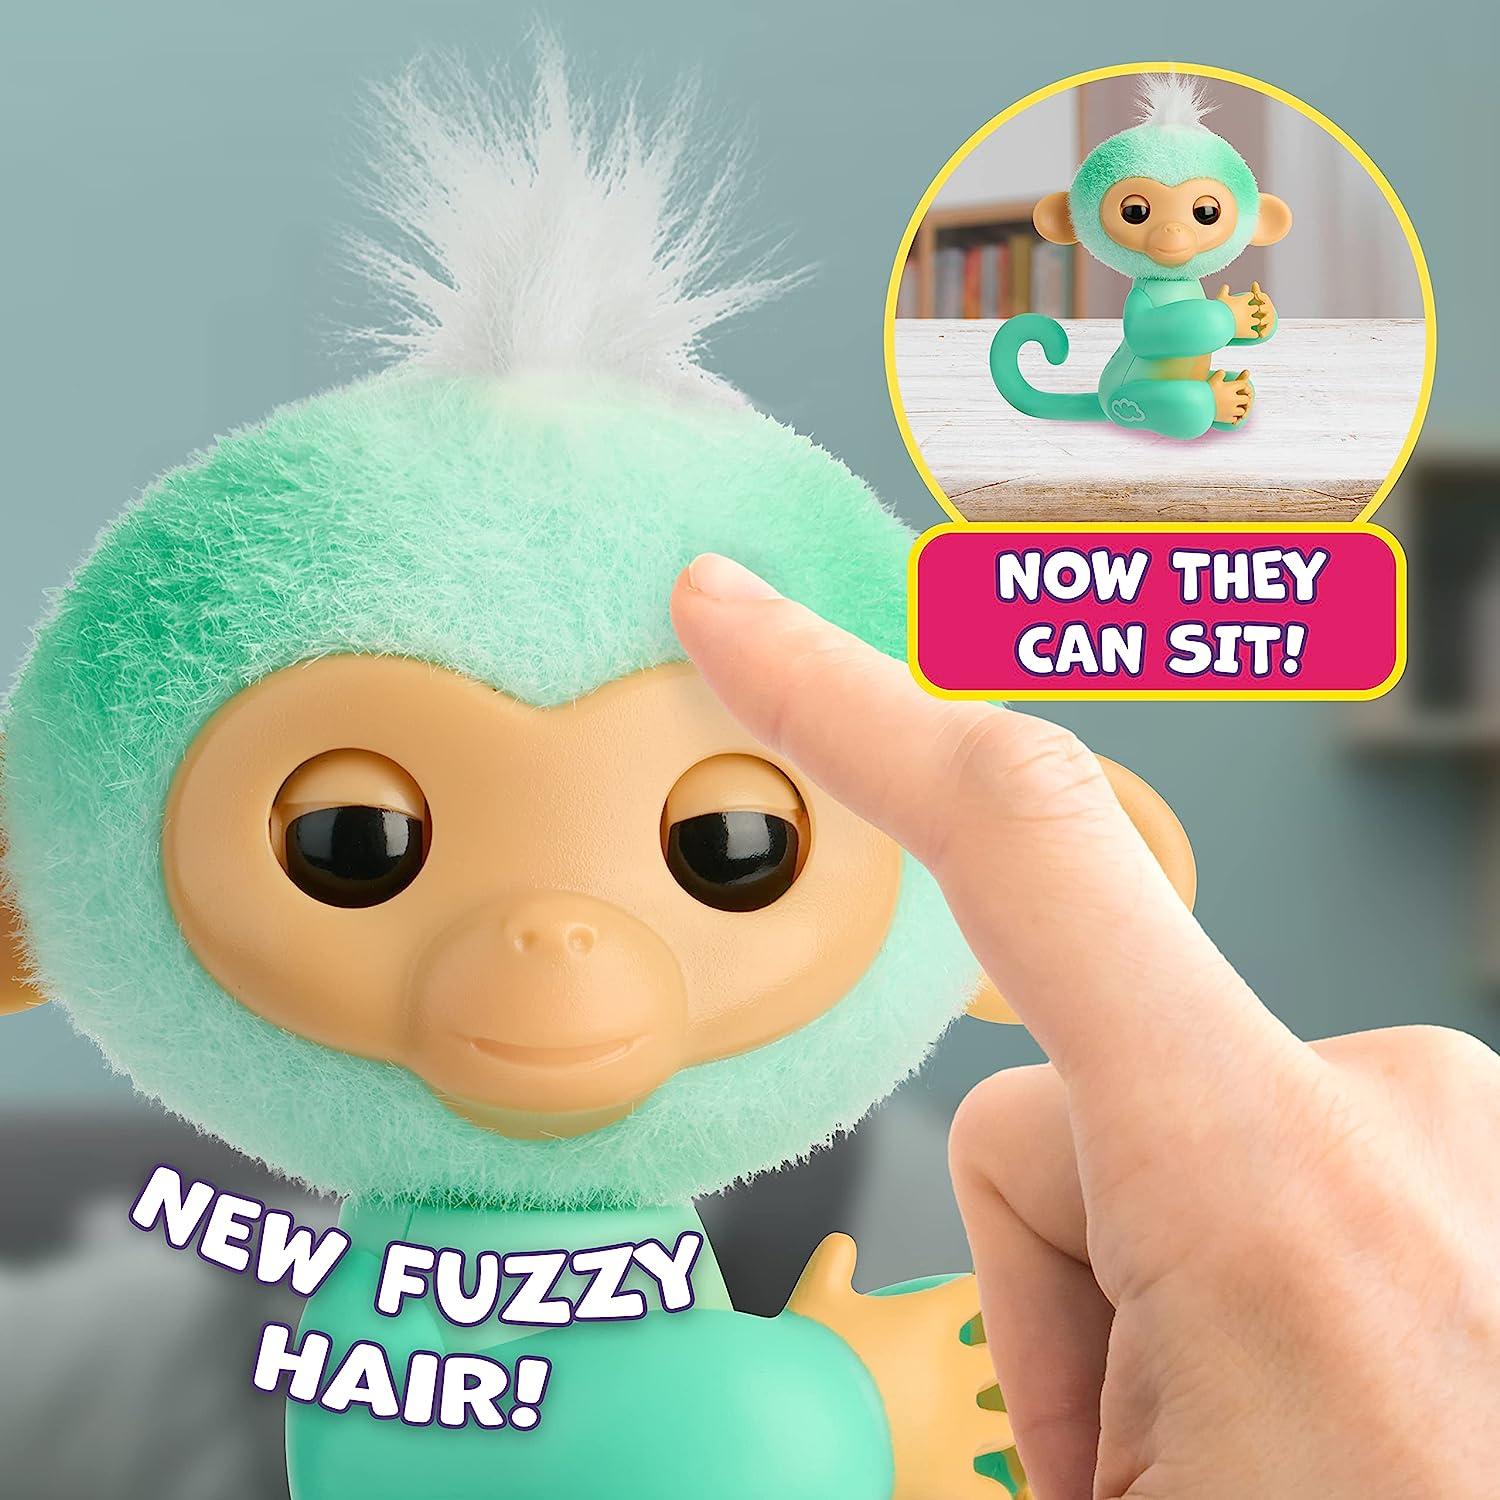 Fingerlings Interactive Baby Monkey TEAL AVA